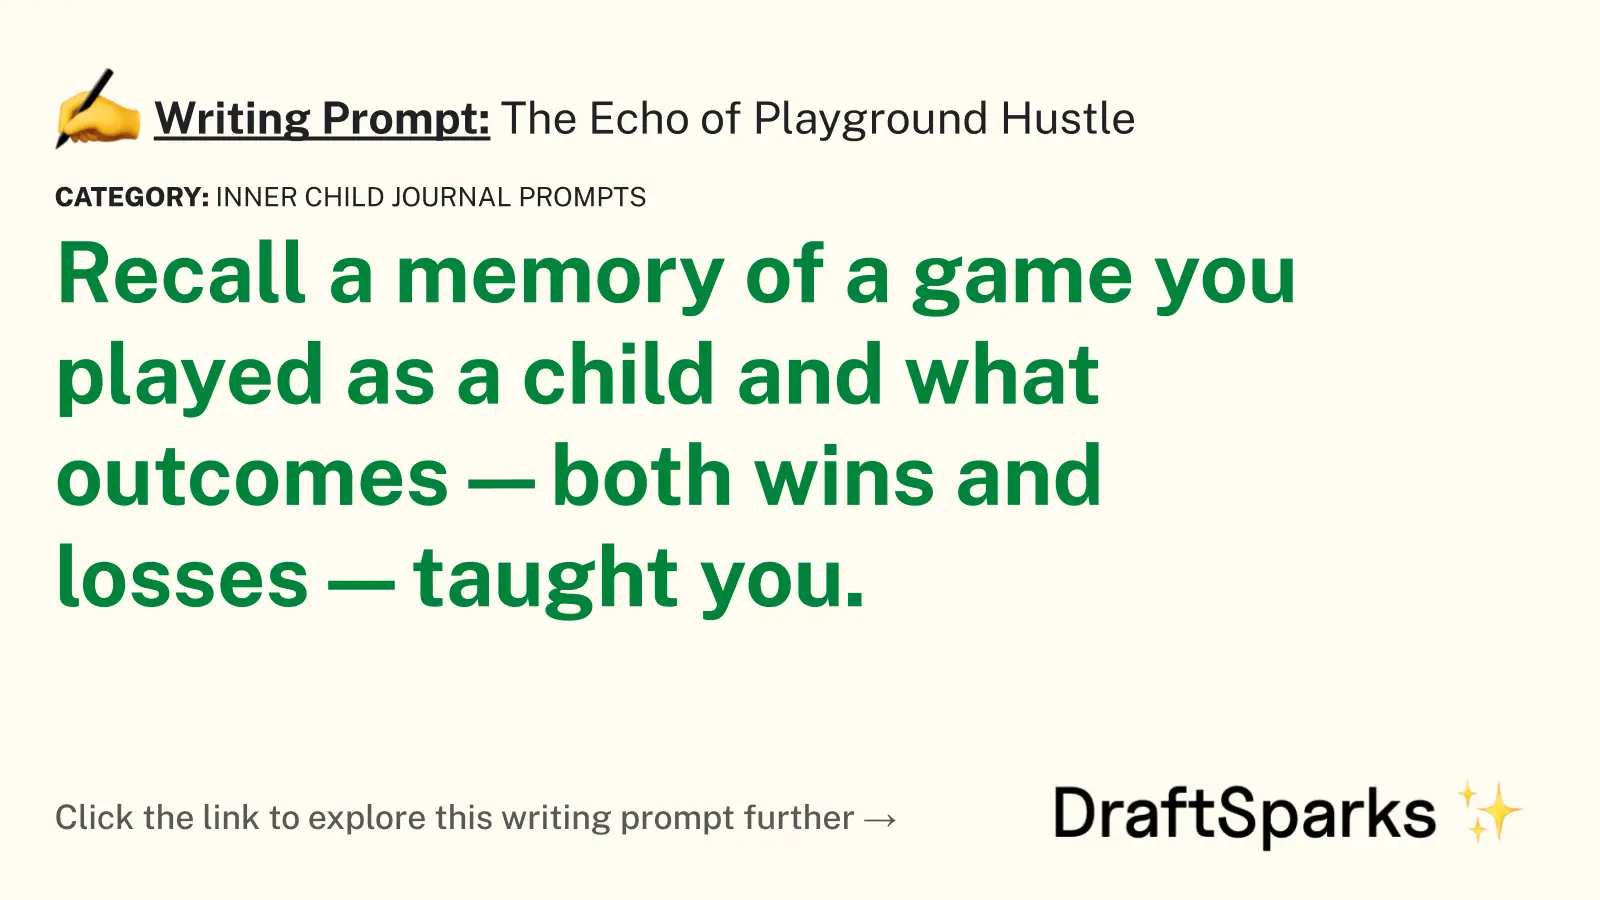 The Echo of Playground Hustle